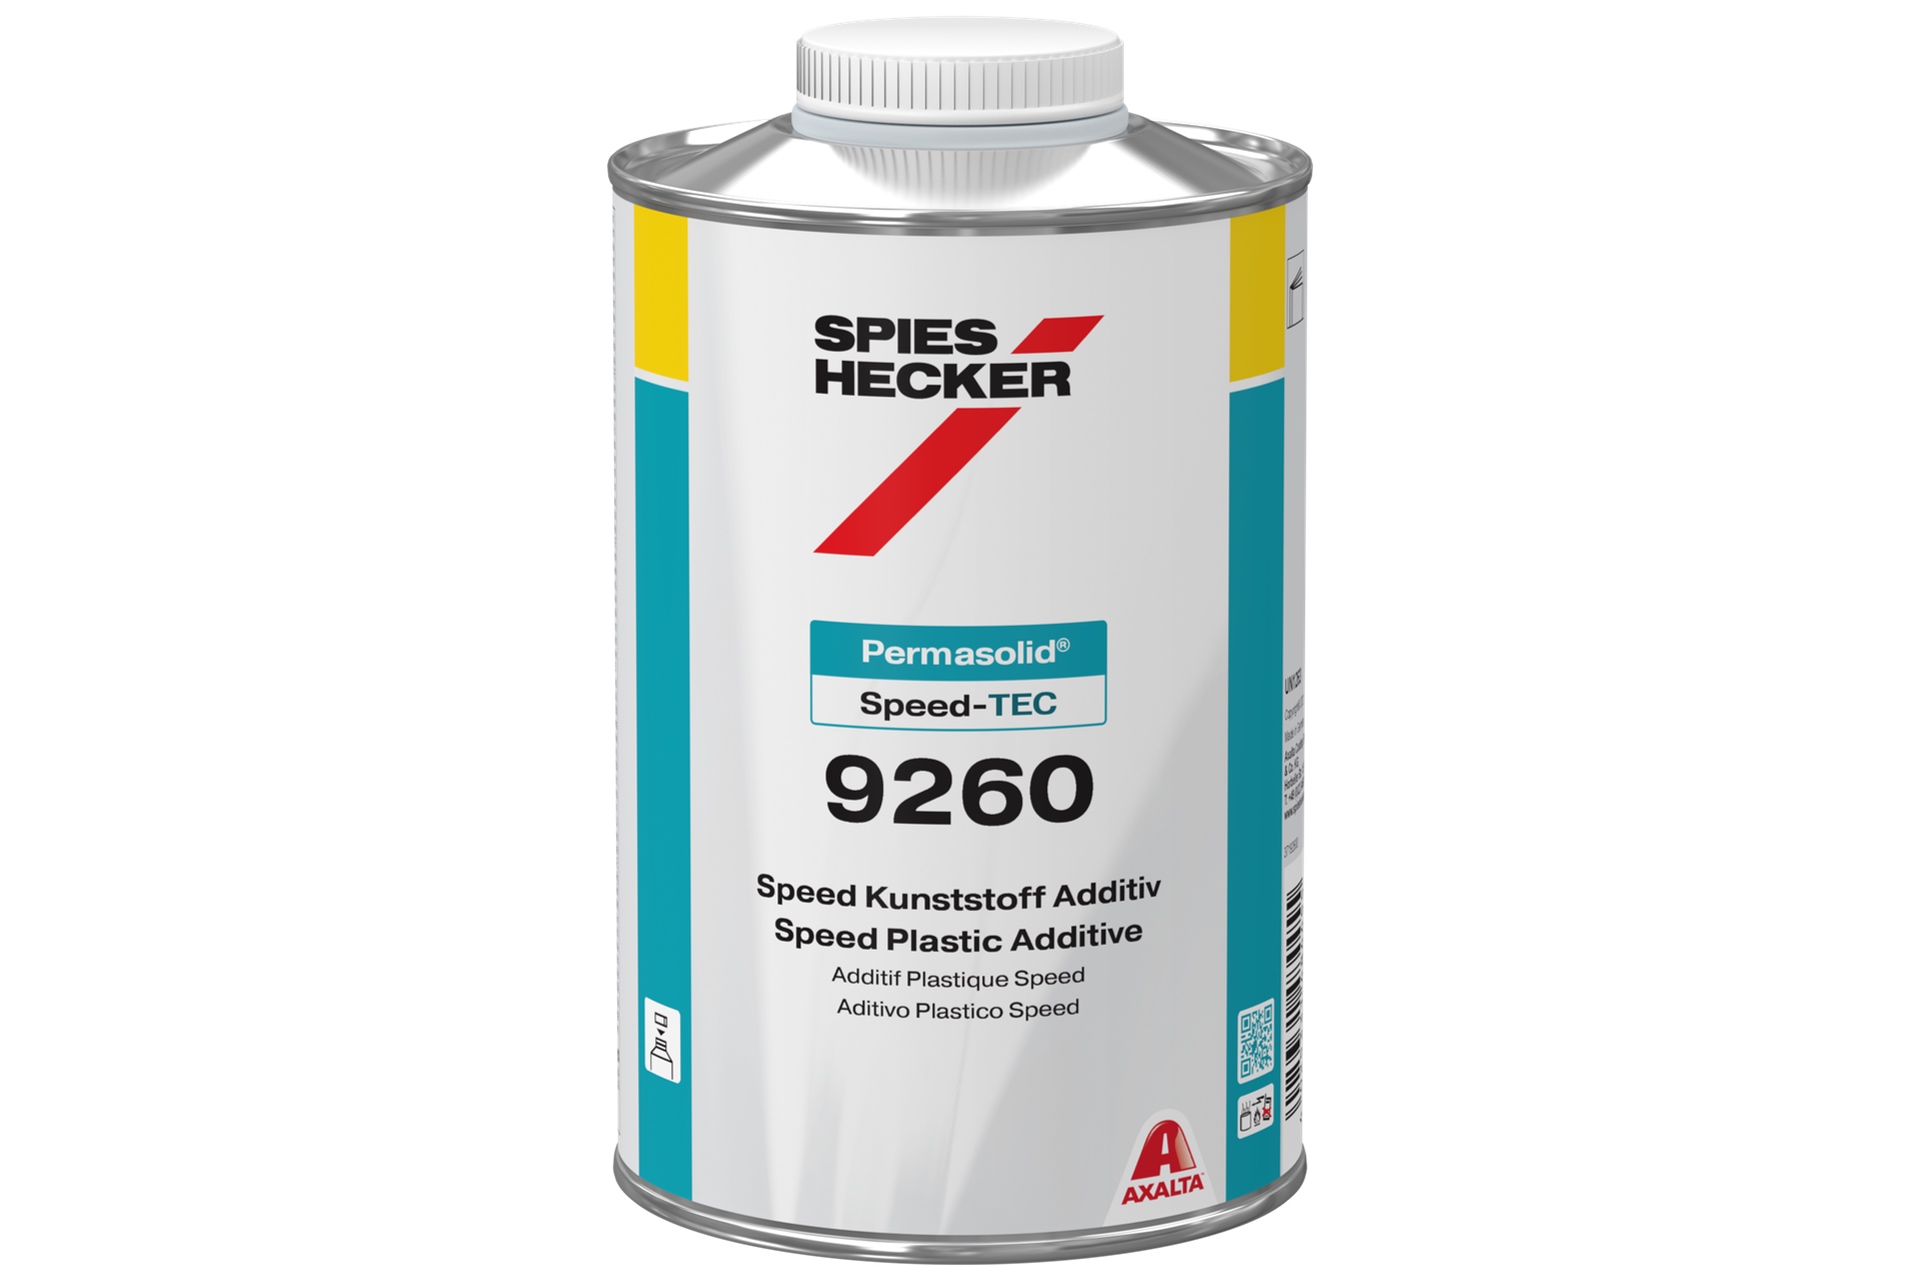 Spies Hecker Launches Permasolid Speed-TEC Plastic Additive 9260 In Australia